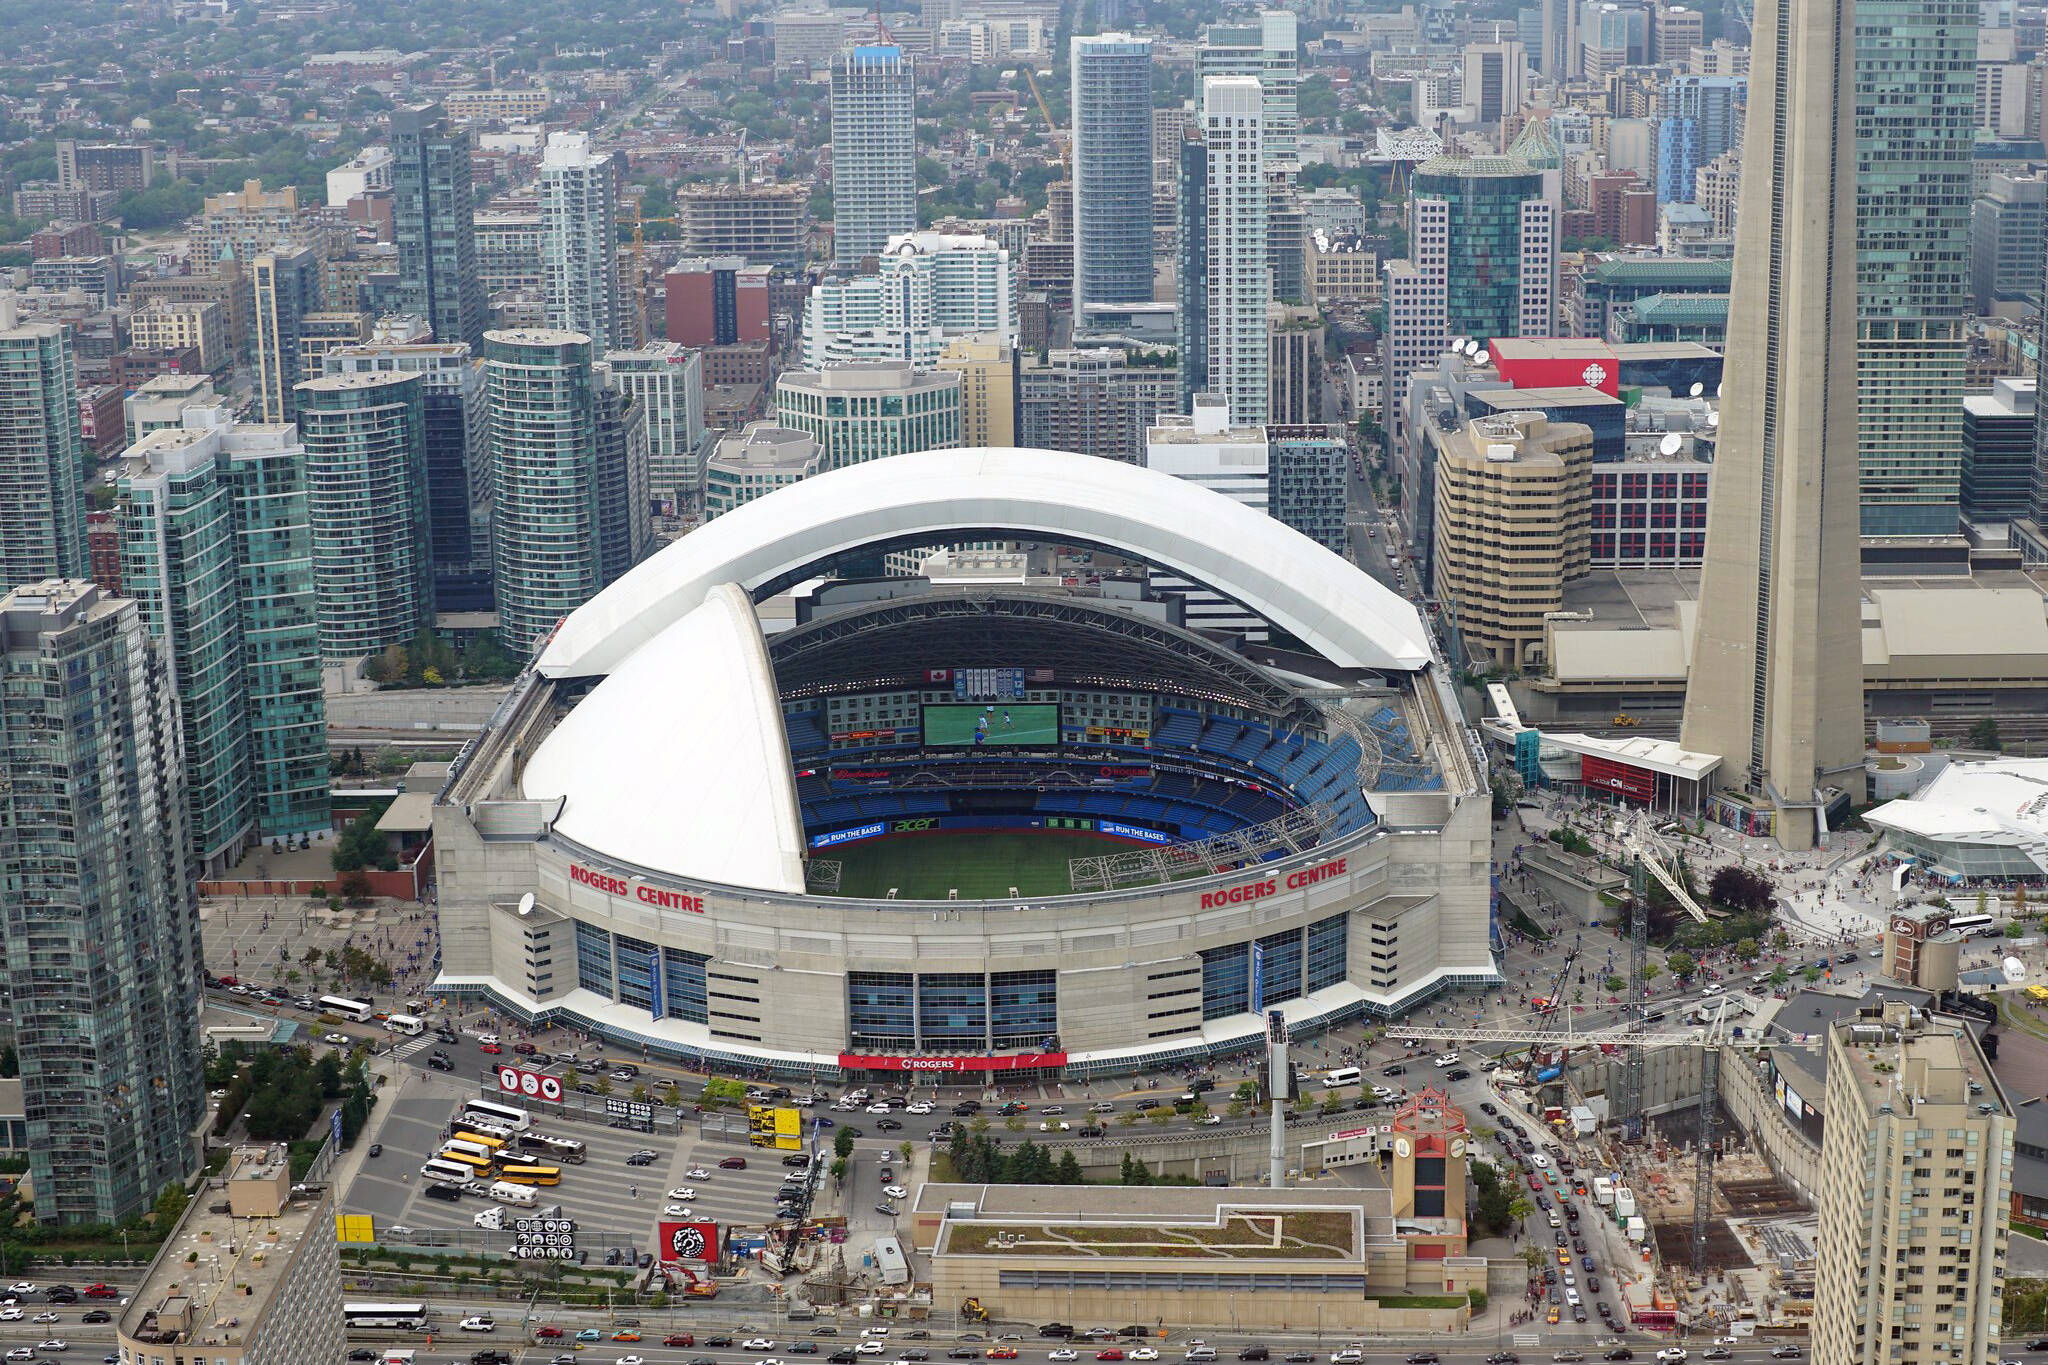 Toronto Blue Jays at Rogers Centre aka Skydome